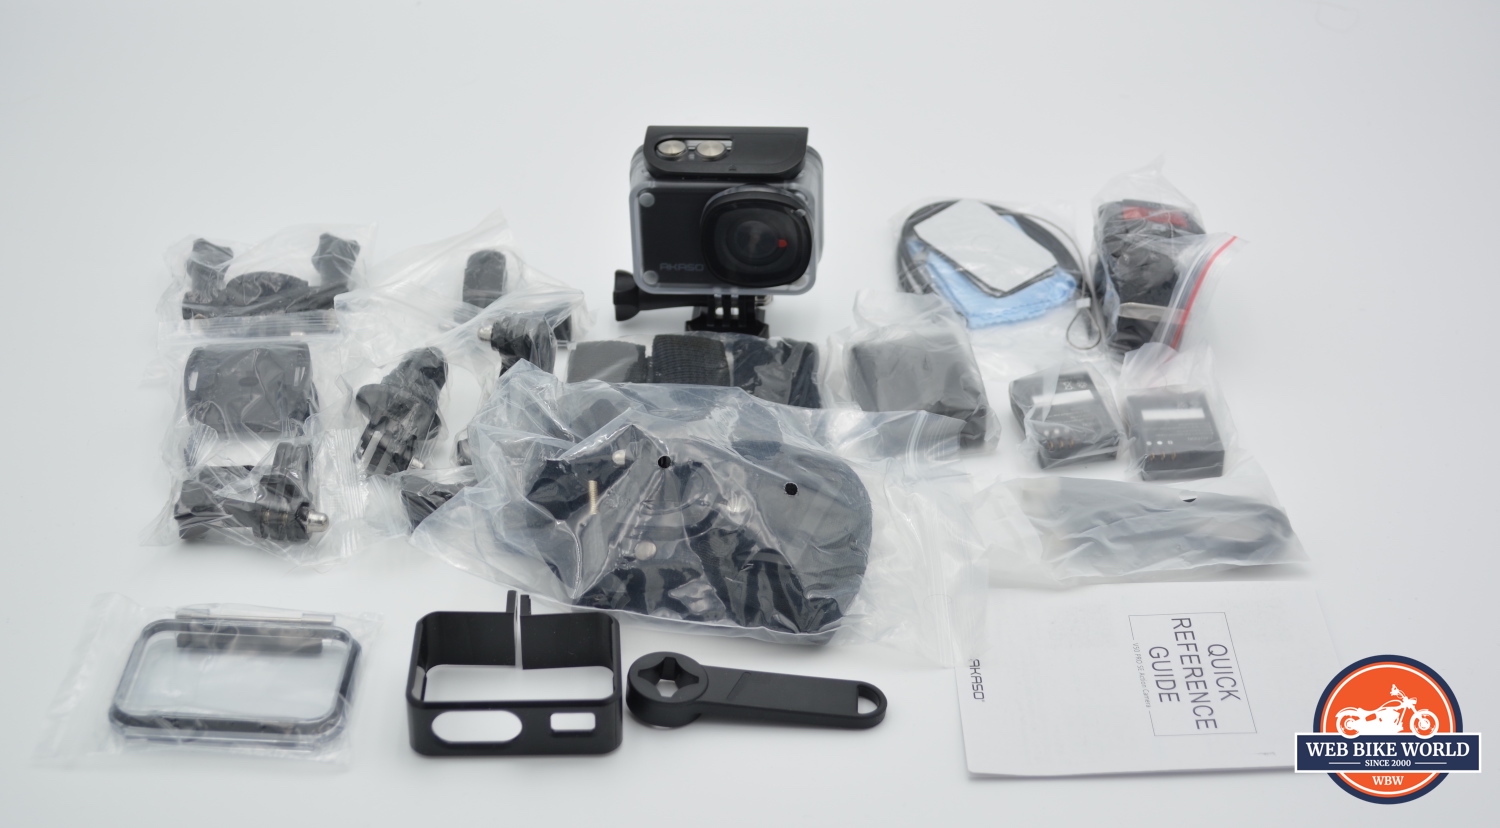 REVIEW] AKASO V50 Pro SE Action Camera Review